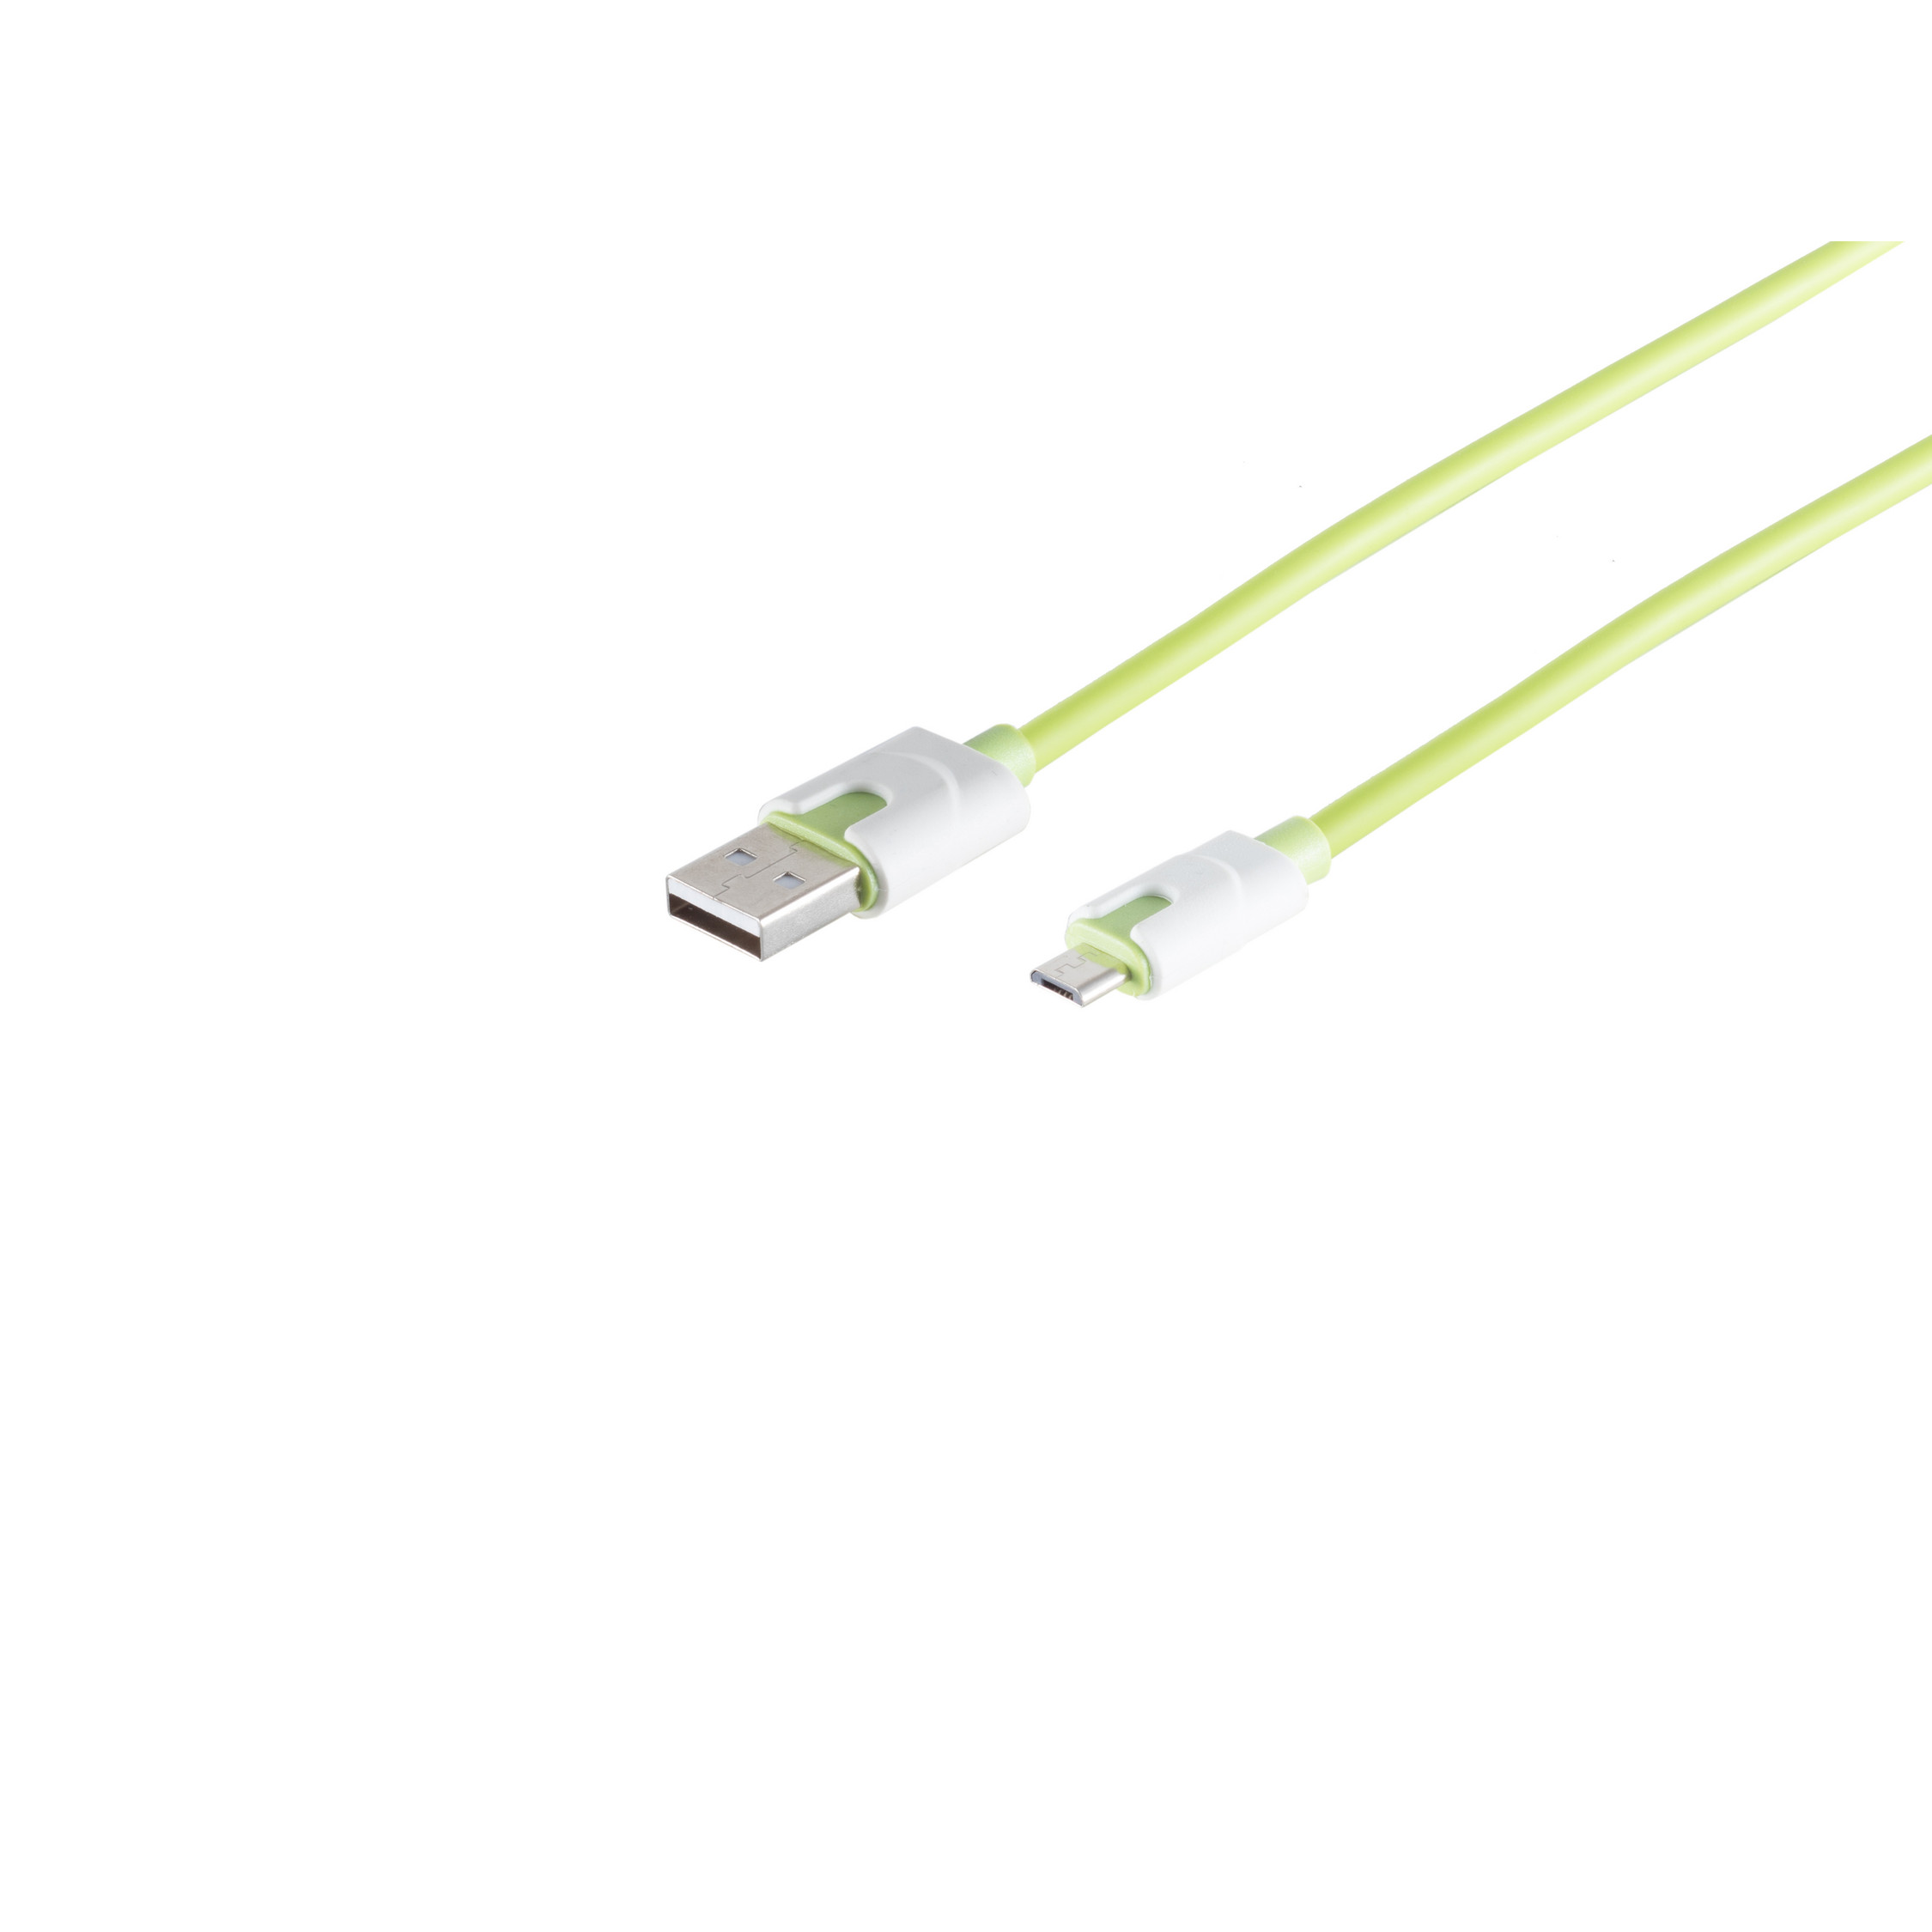 S/CONN MAXIMUM USB A grün, CONNECTIVITY USB-Ladekabel Stecker auf Kabel Micro 0,3m B